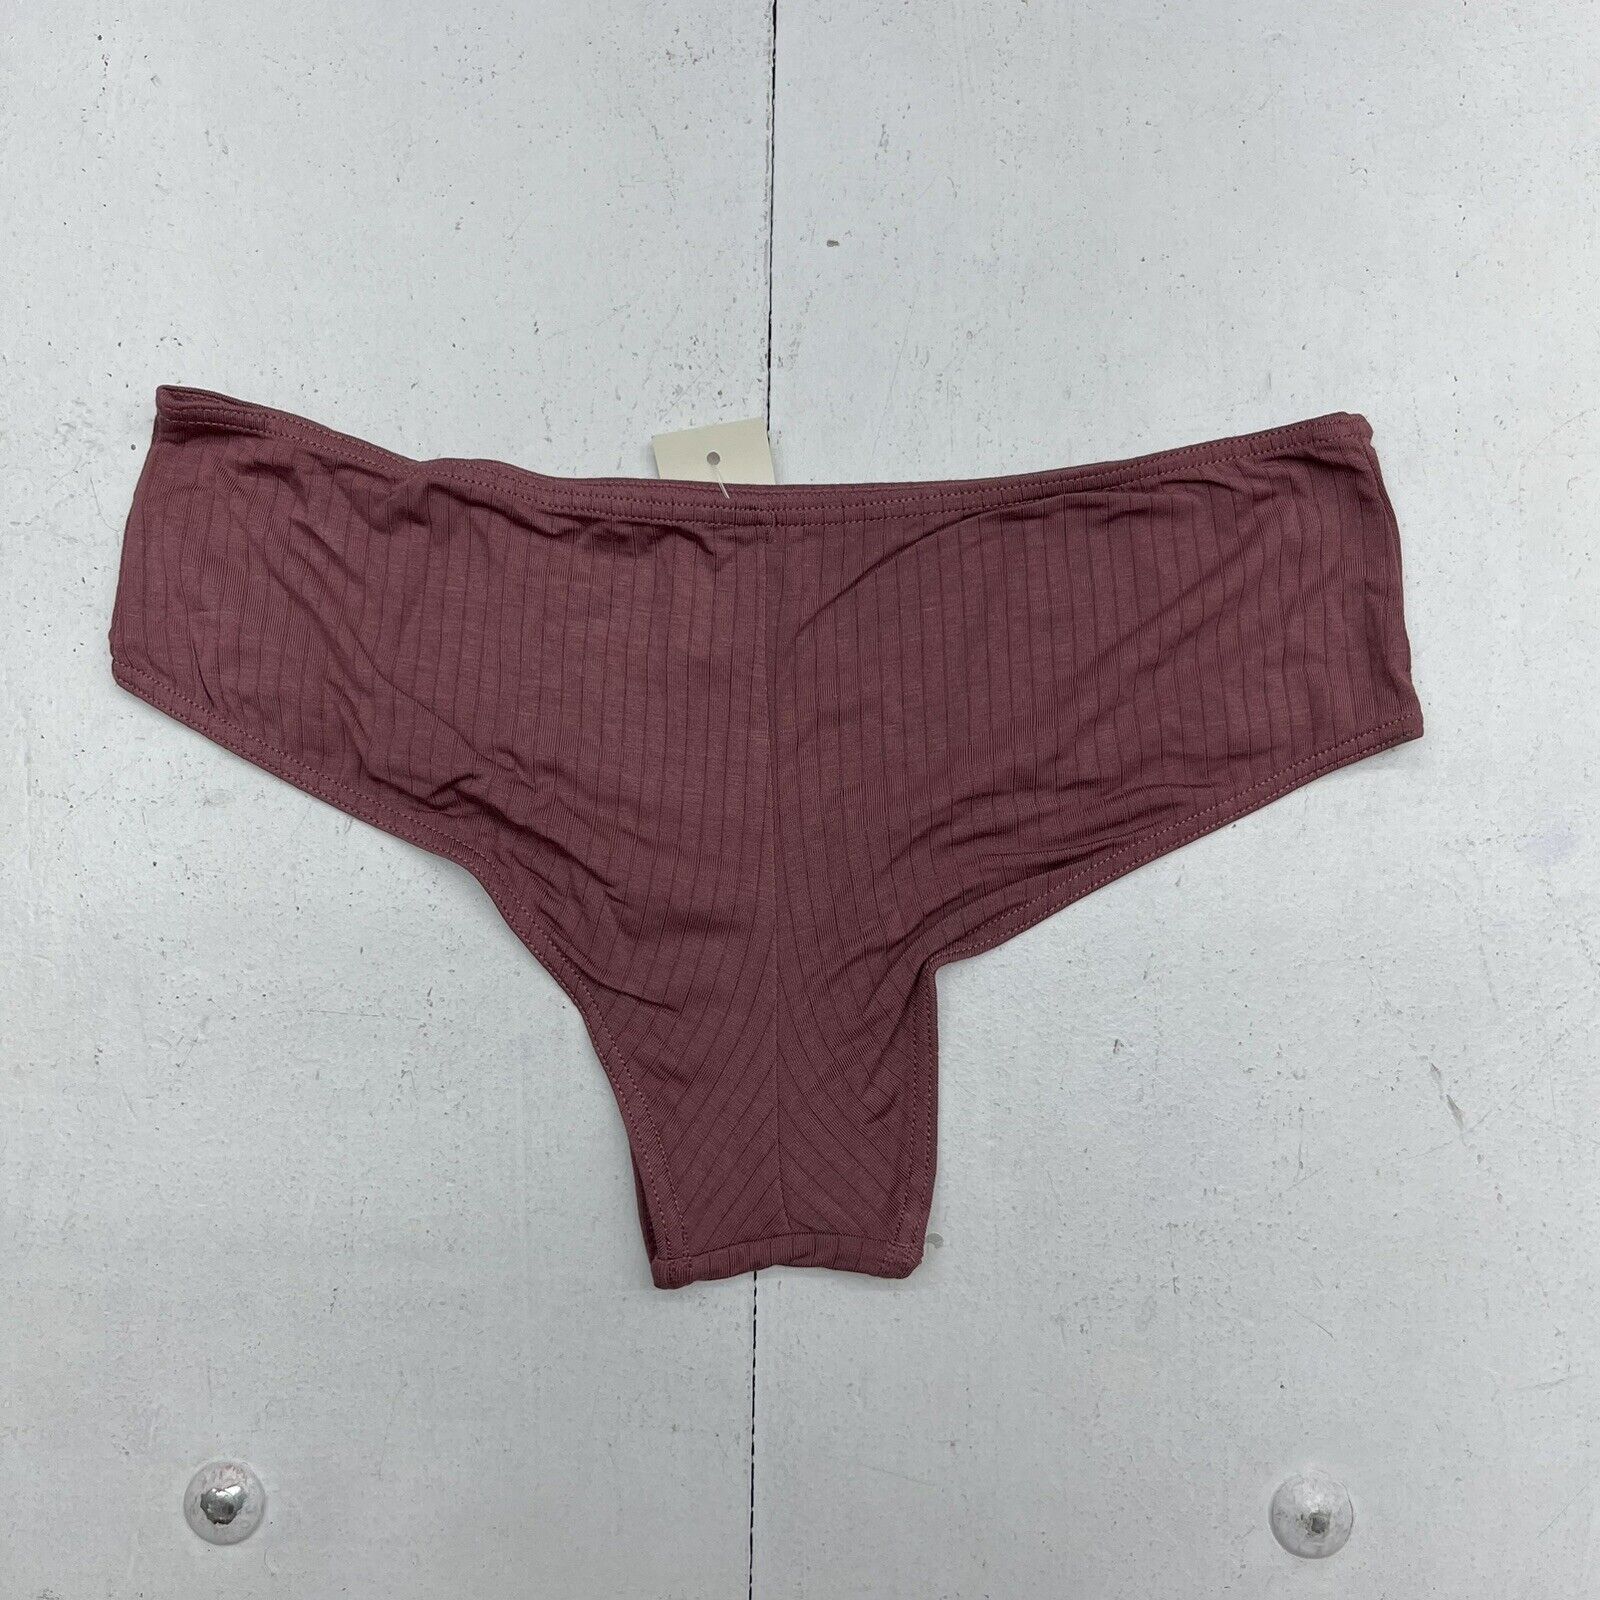 Aeropostale Mauve Cheeky Underwear Women's Size Medium NEW